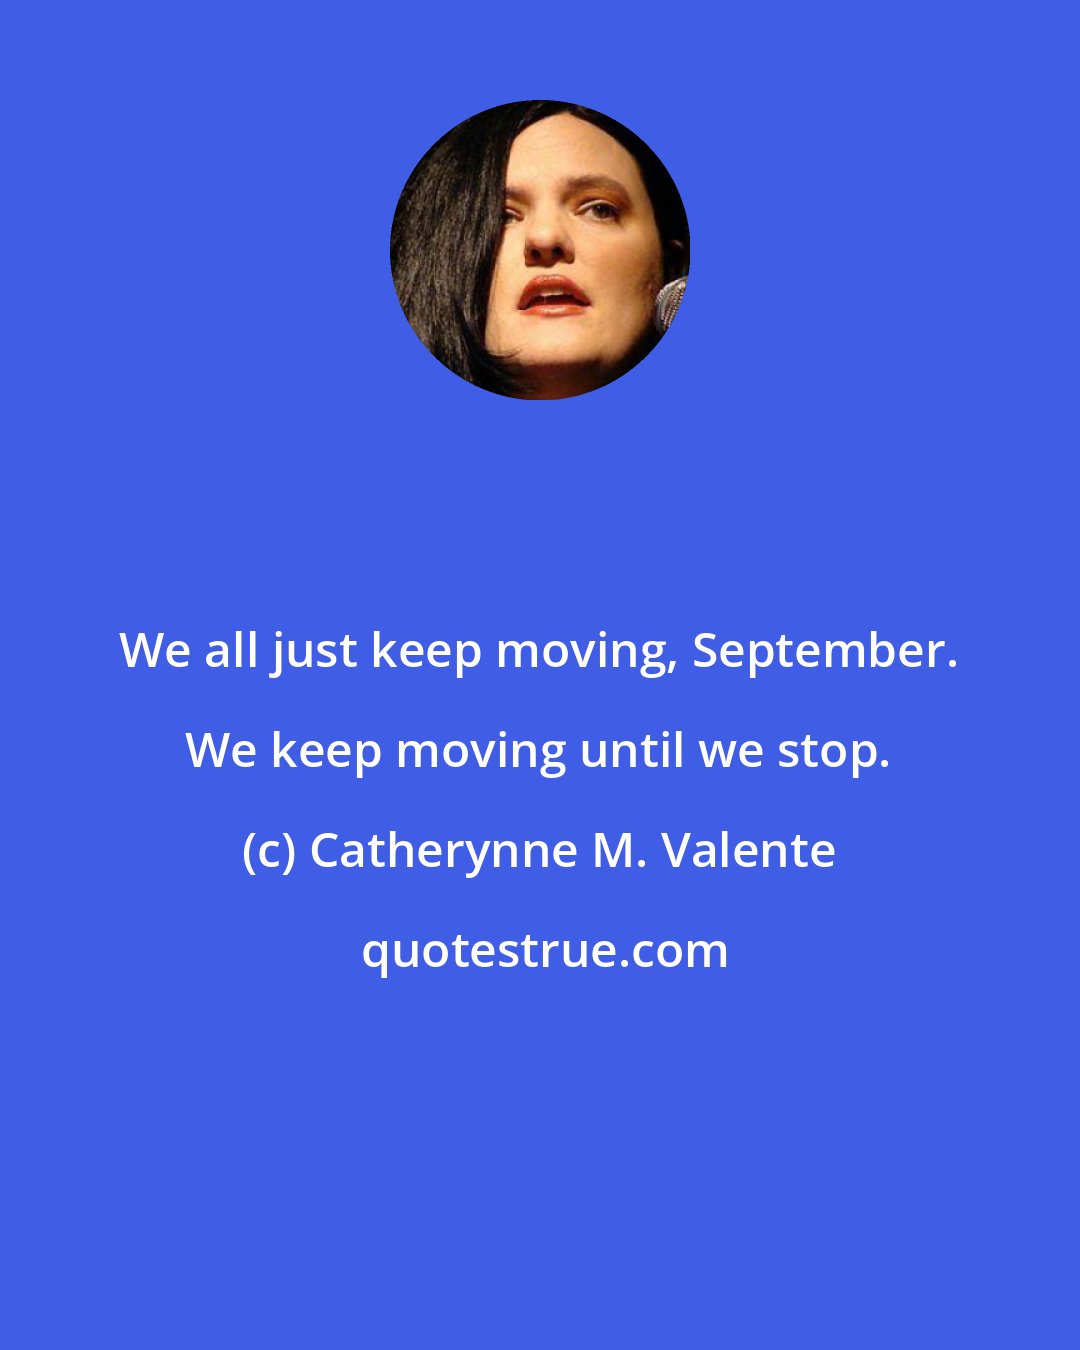 Catherynne M. Valente: We all just keep moving, September. We keep moving until we stop.